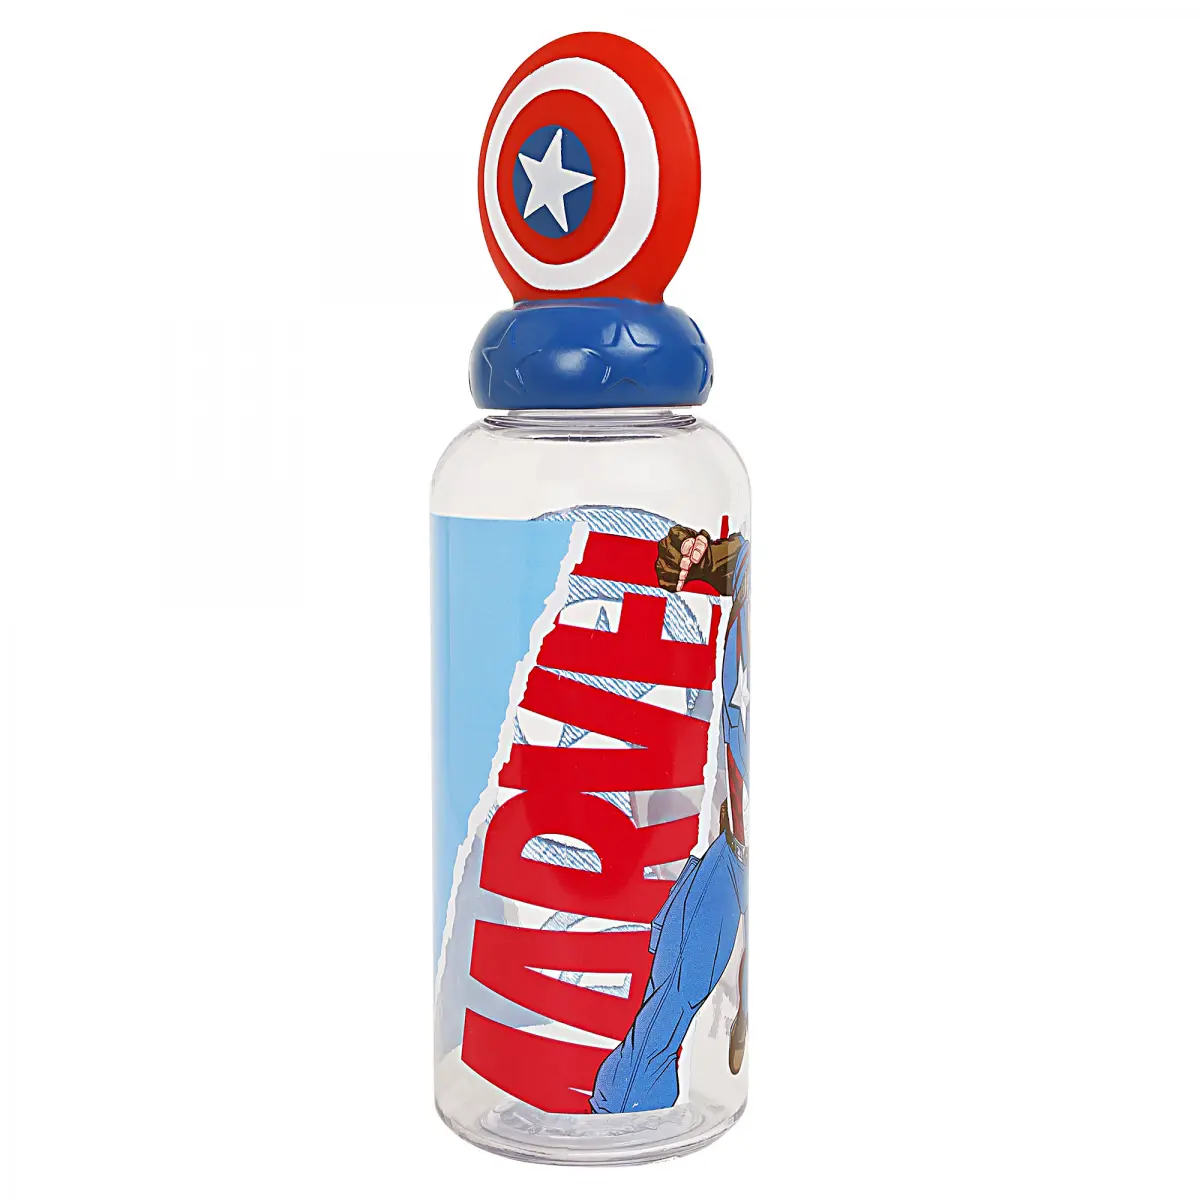 Disney Captain America Stor 3D Figurine Water Bottle, 560ml, Multicolour